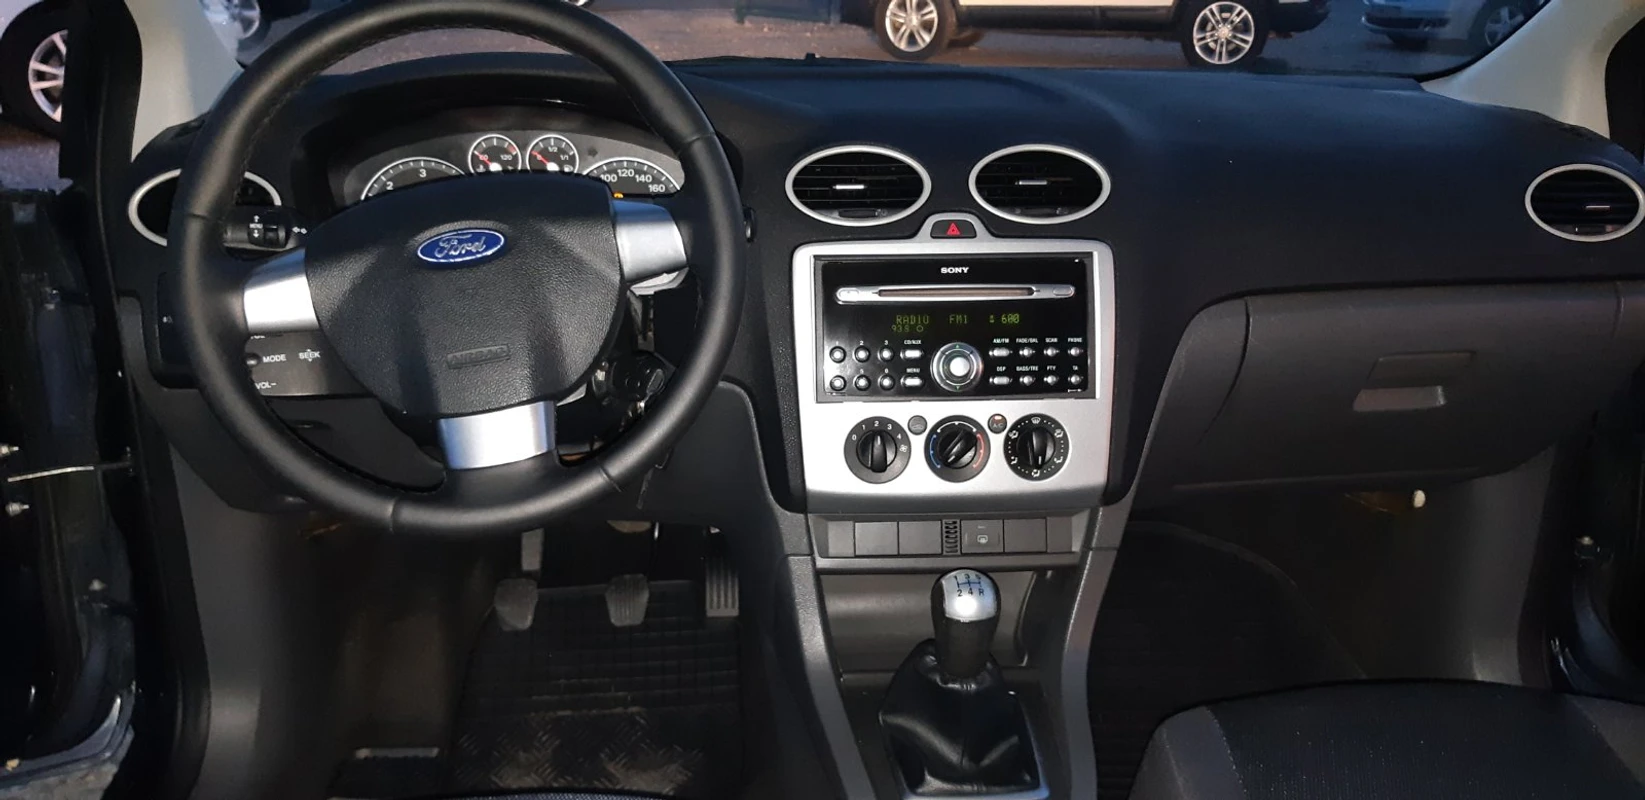 Ford - Focus 1.8 tdci